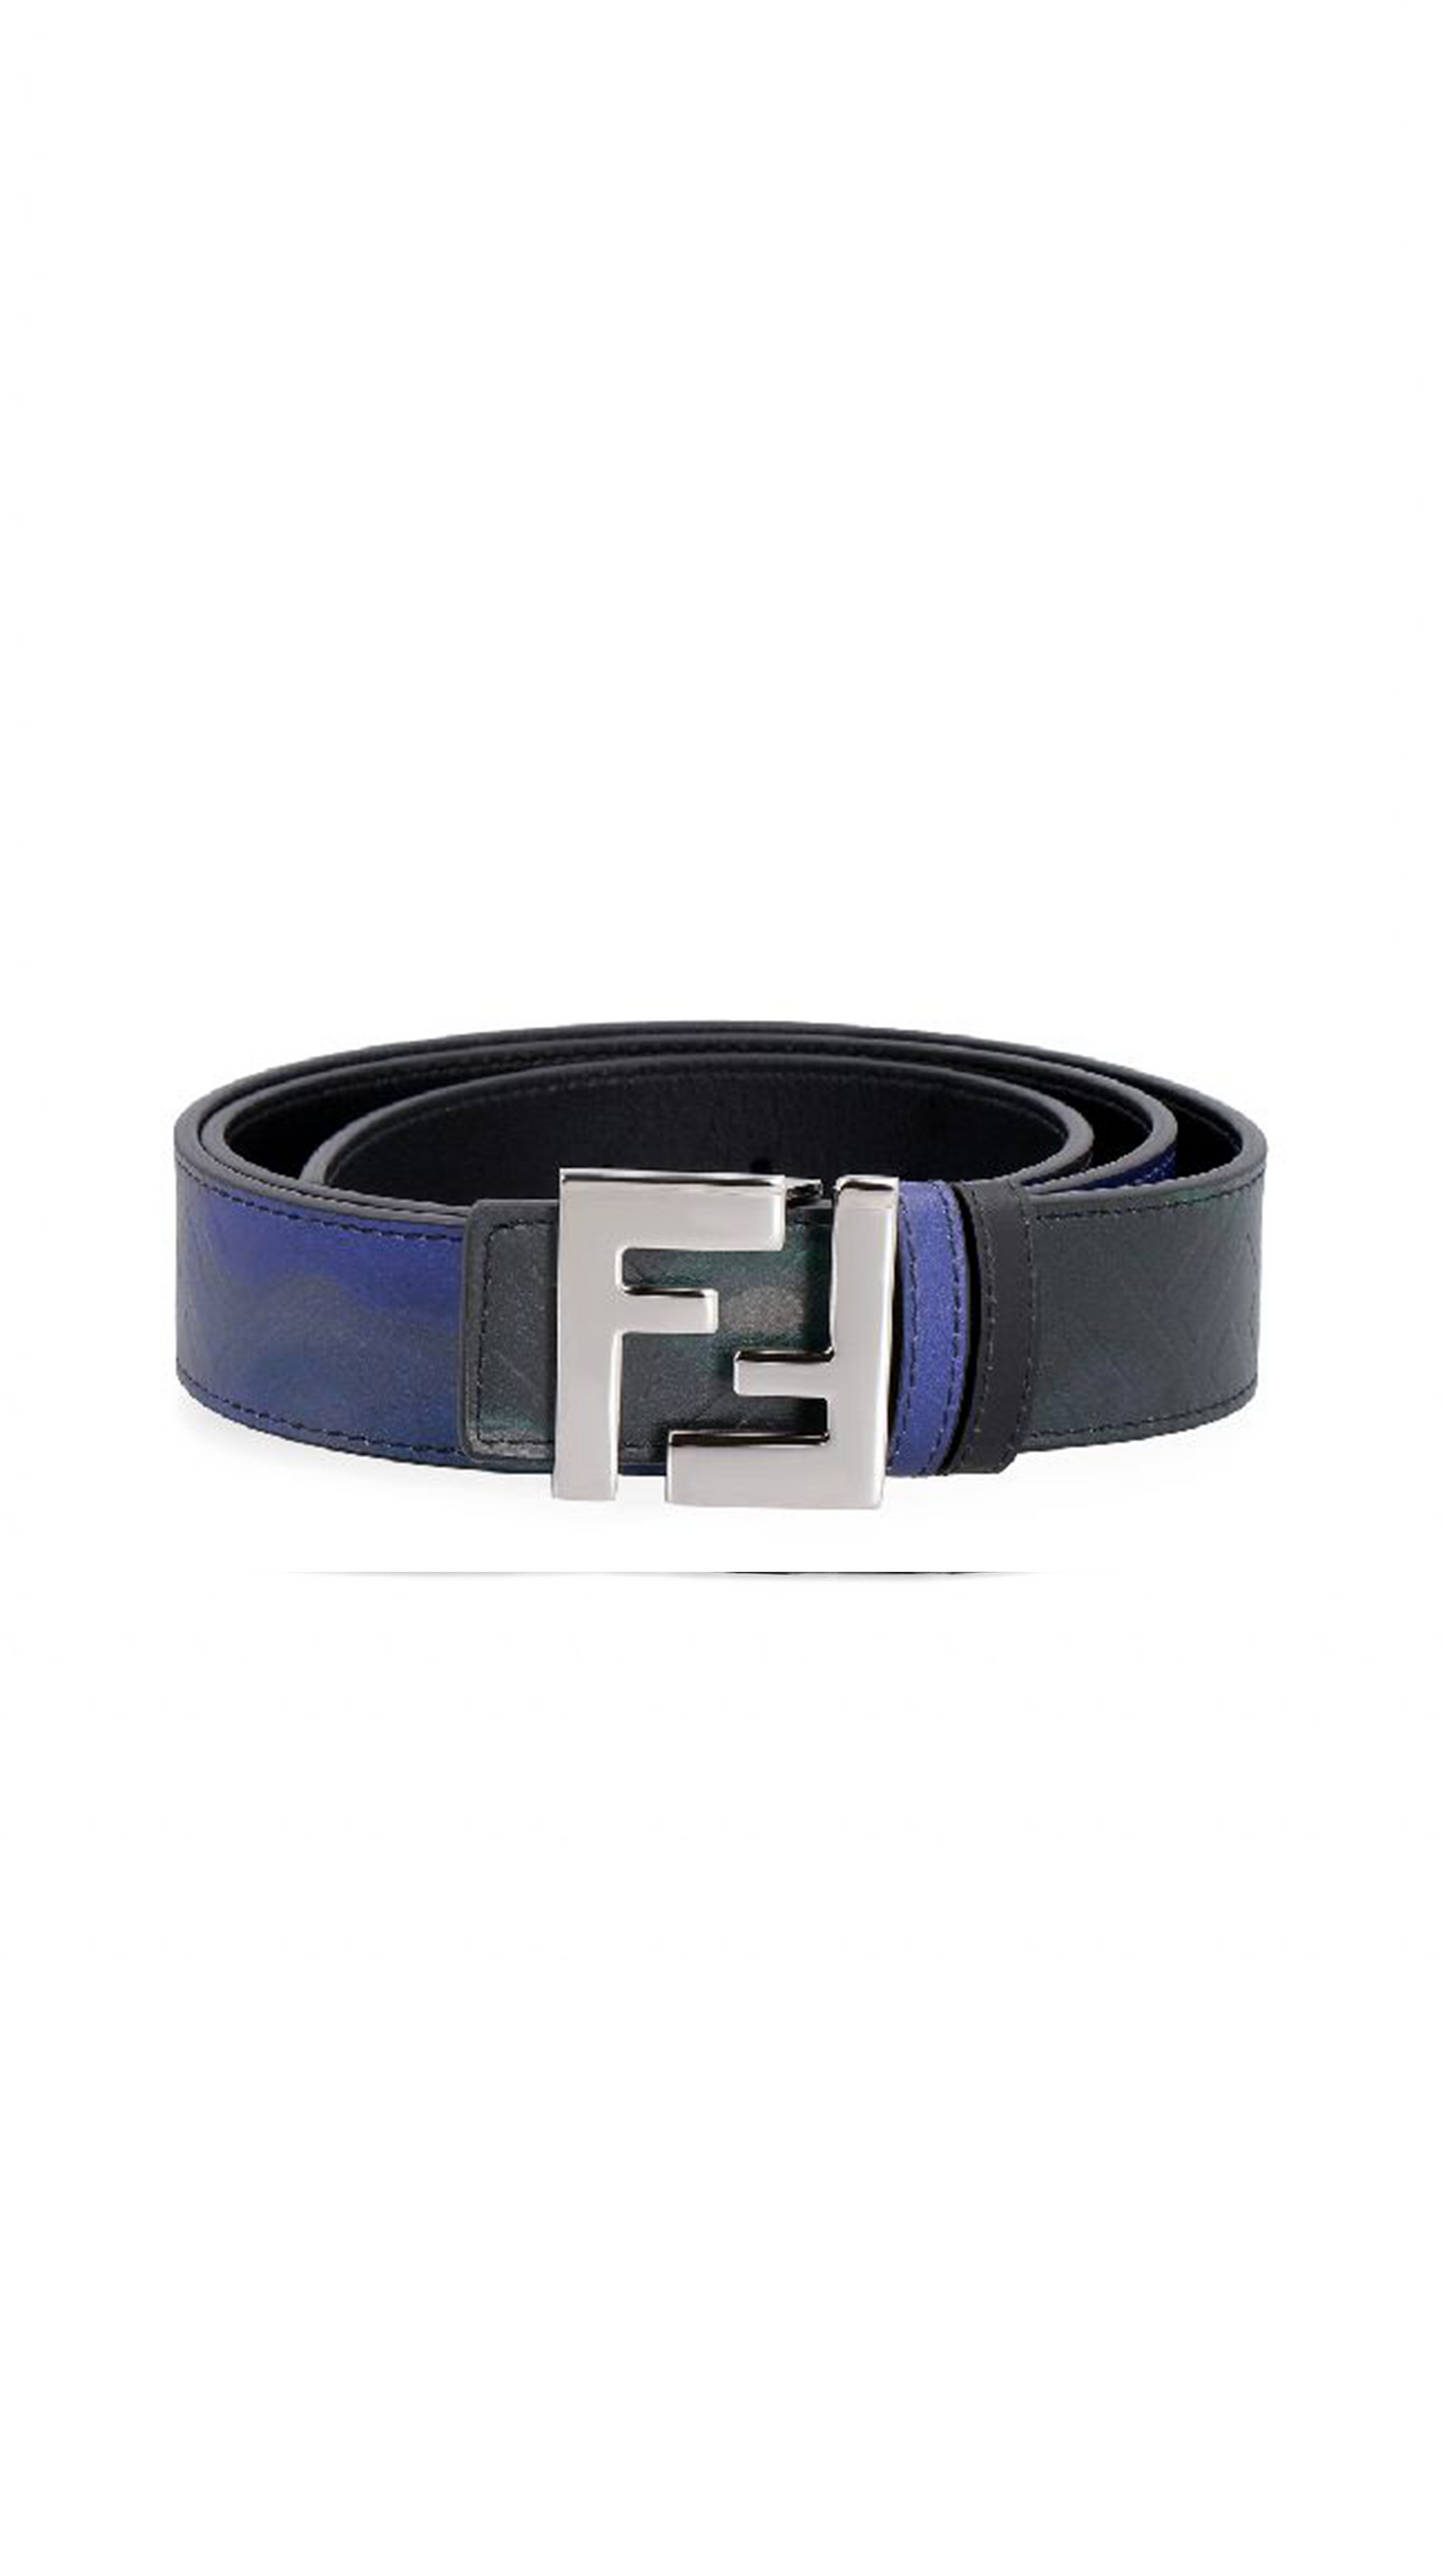 Leather Belt - Dark Blue